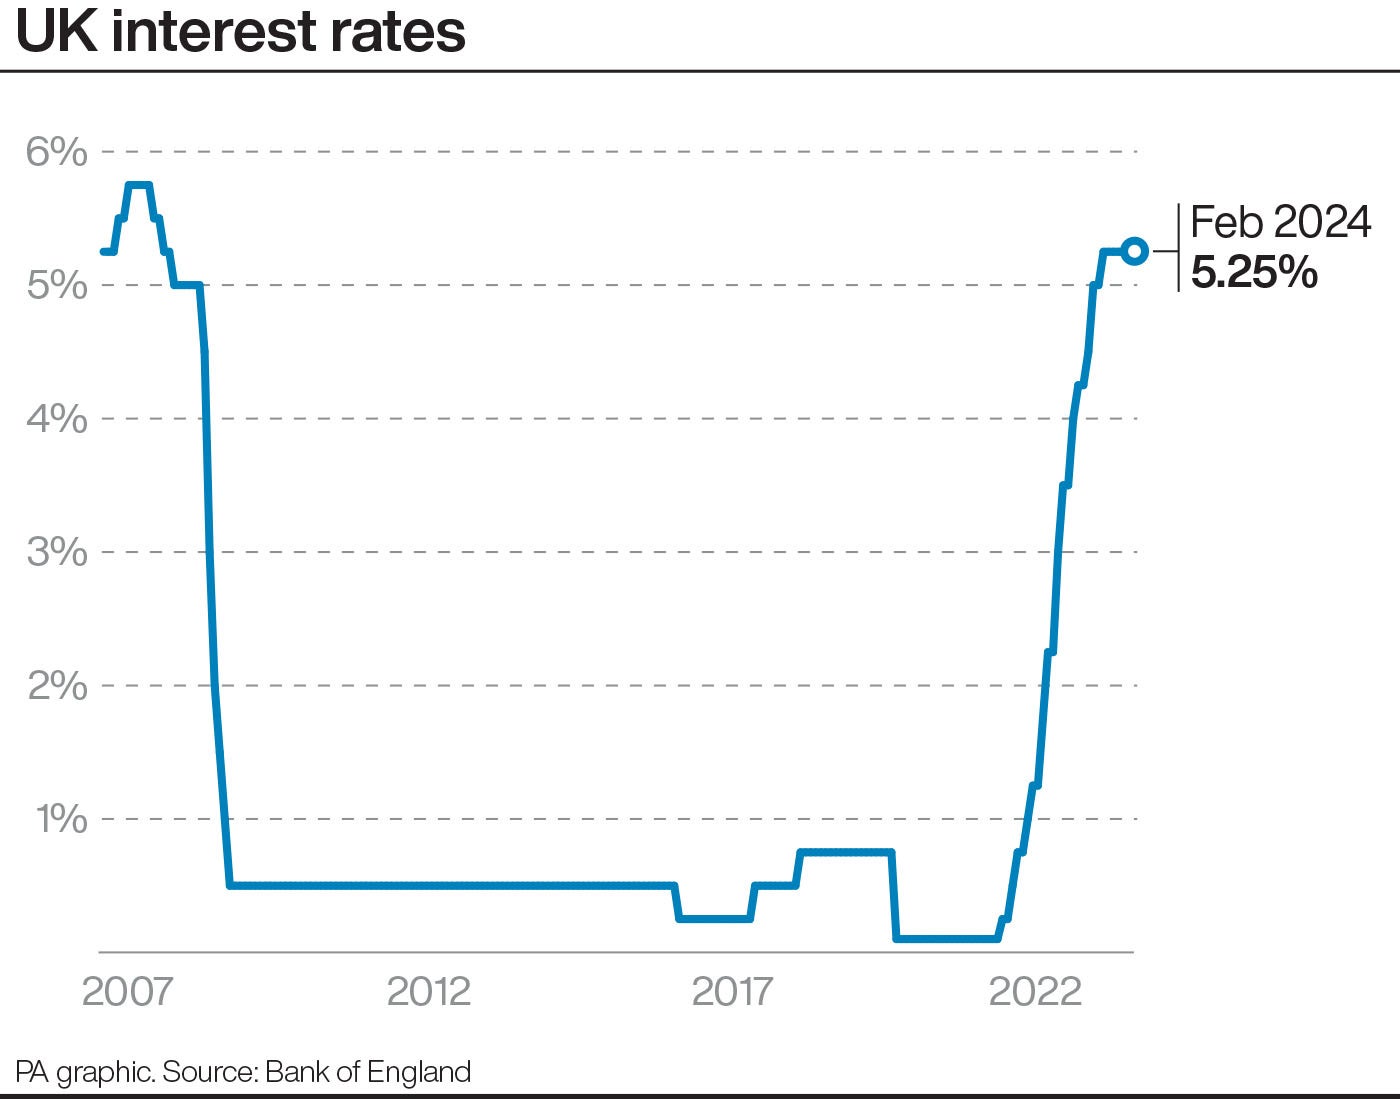 Interest rates remain frozen on 5.25%